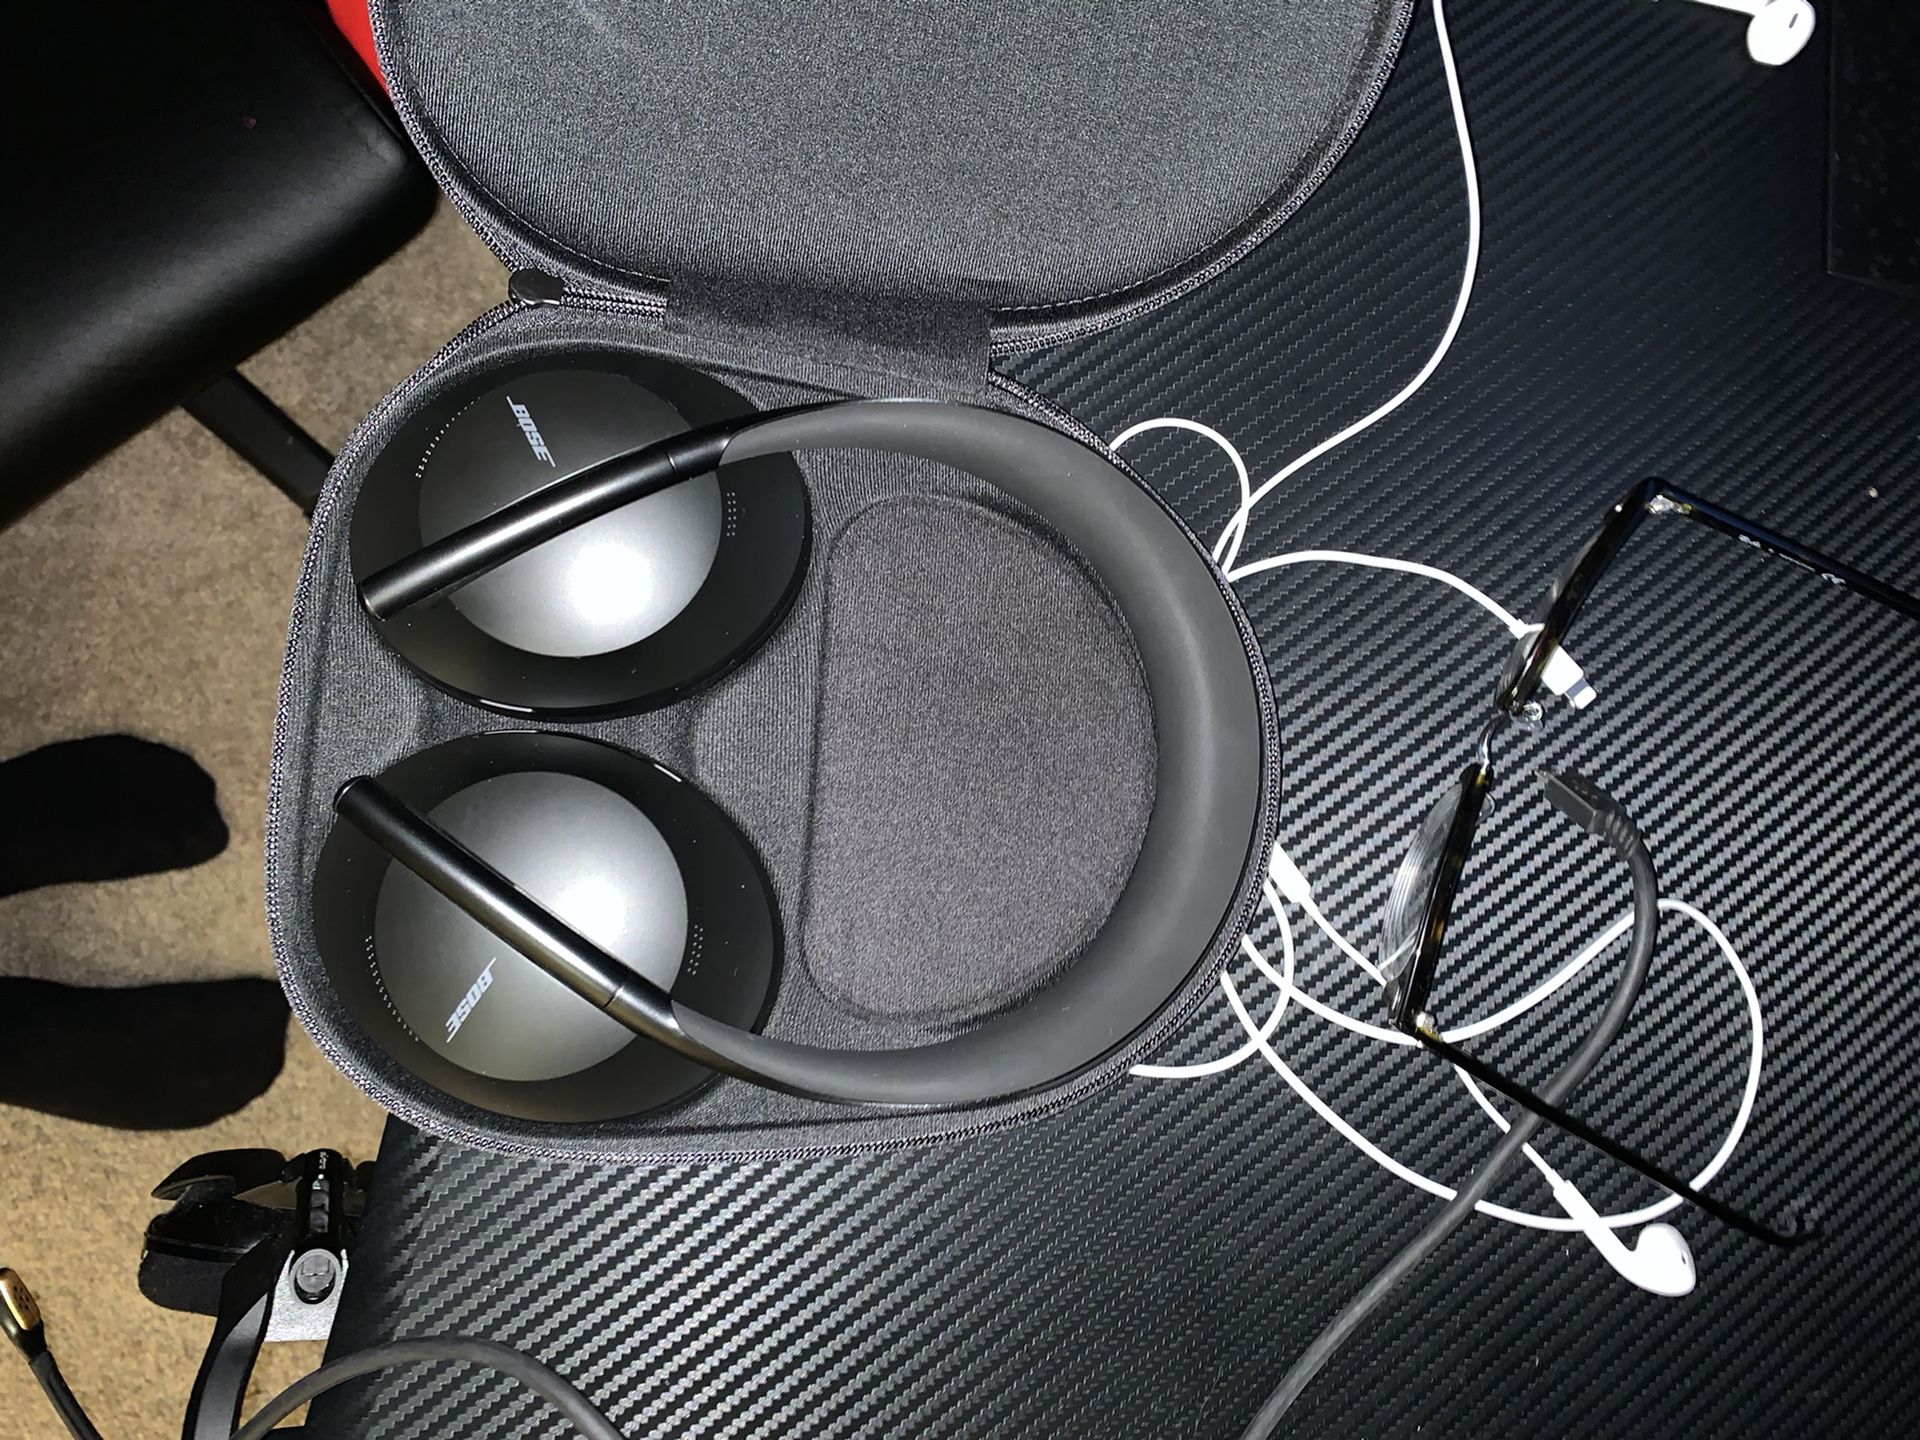 Bose headphones 700